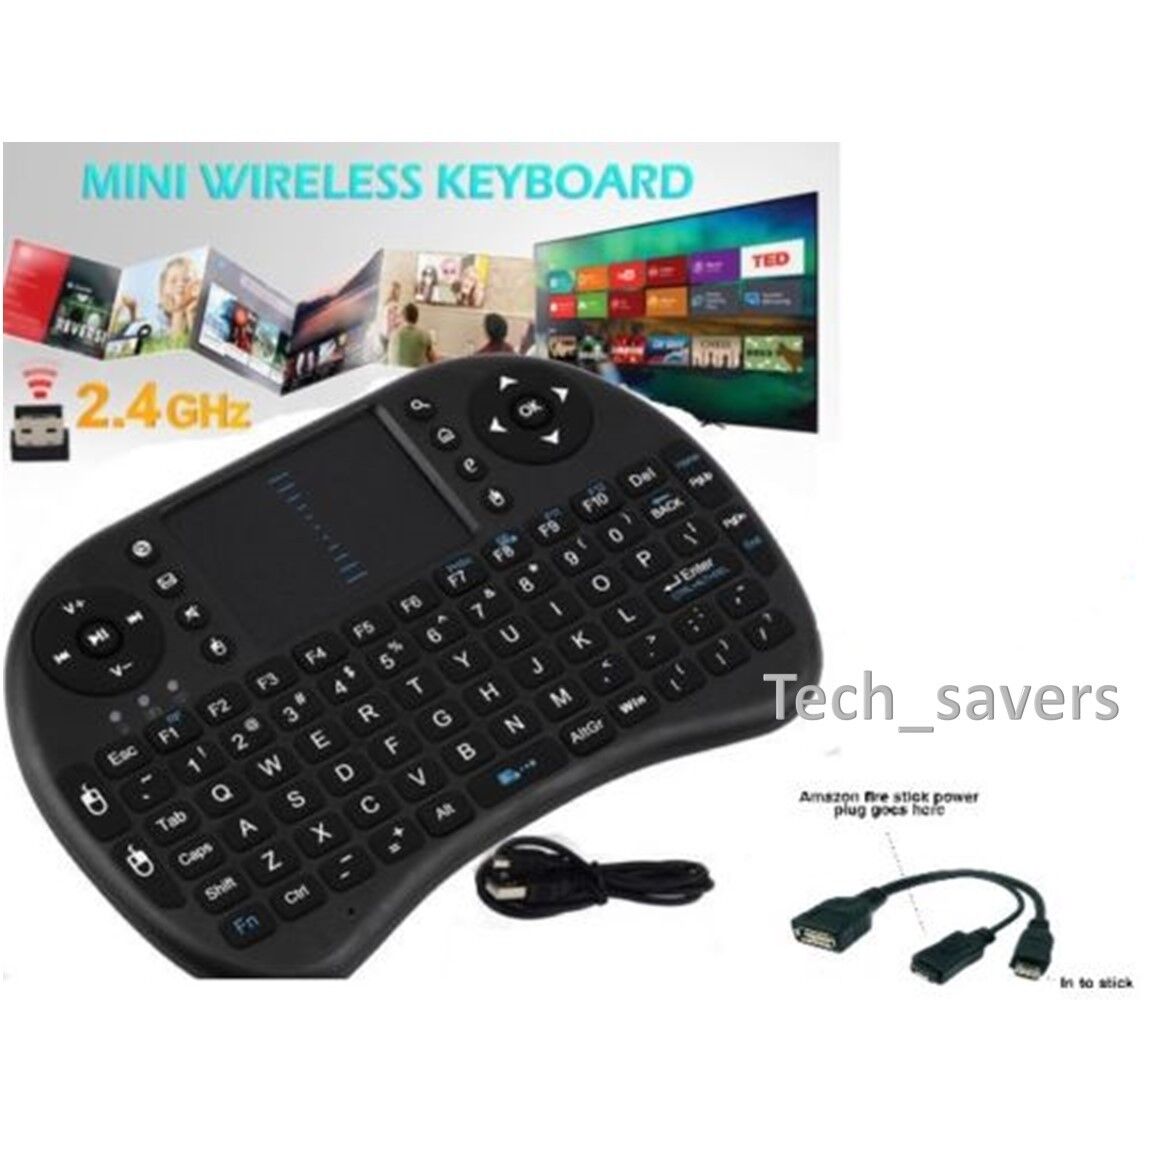 2.4G RF Mini Wireless Keyboard Mouse for Amazon FIRE Stick plus OTG usb adapter